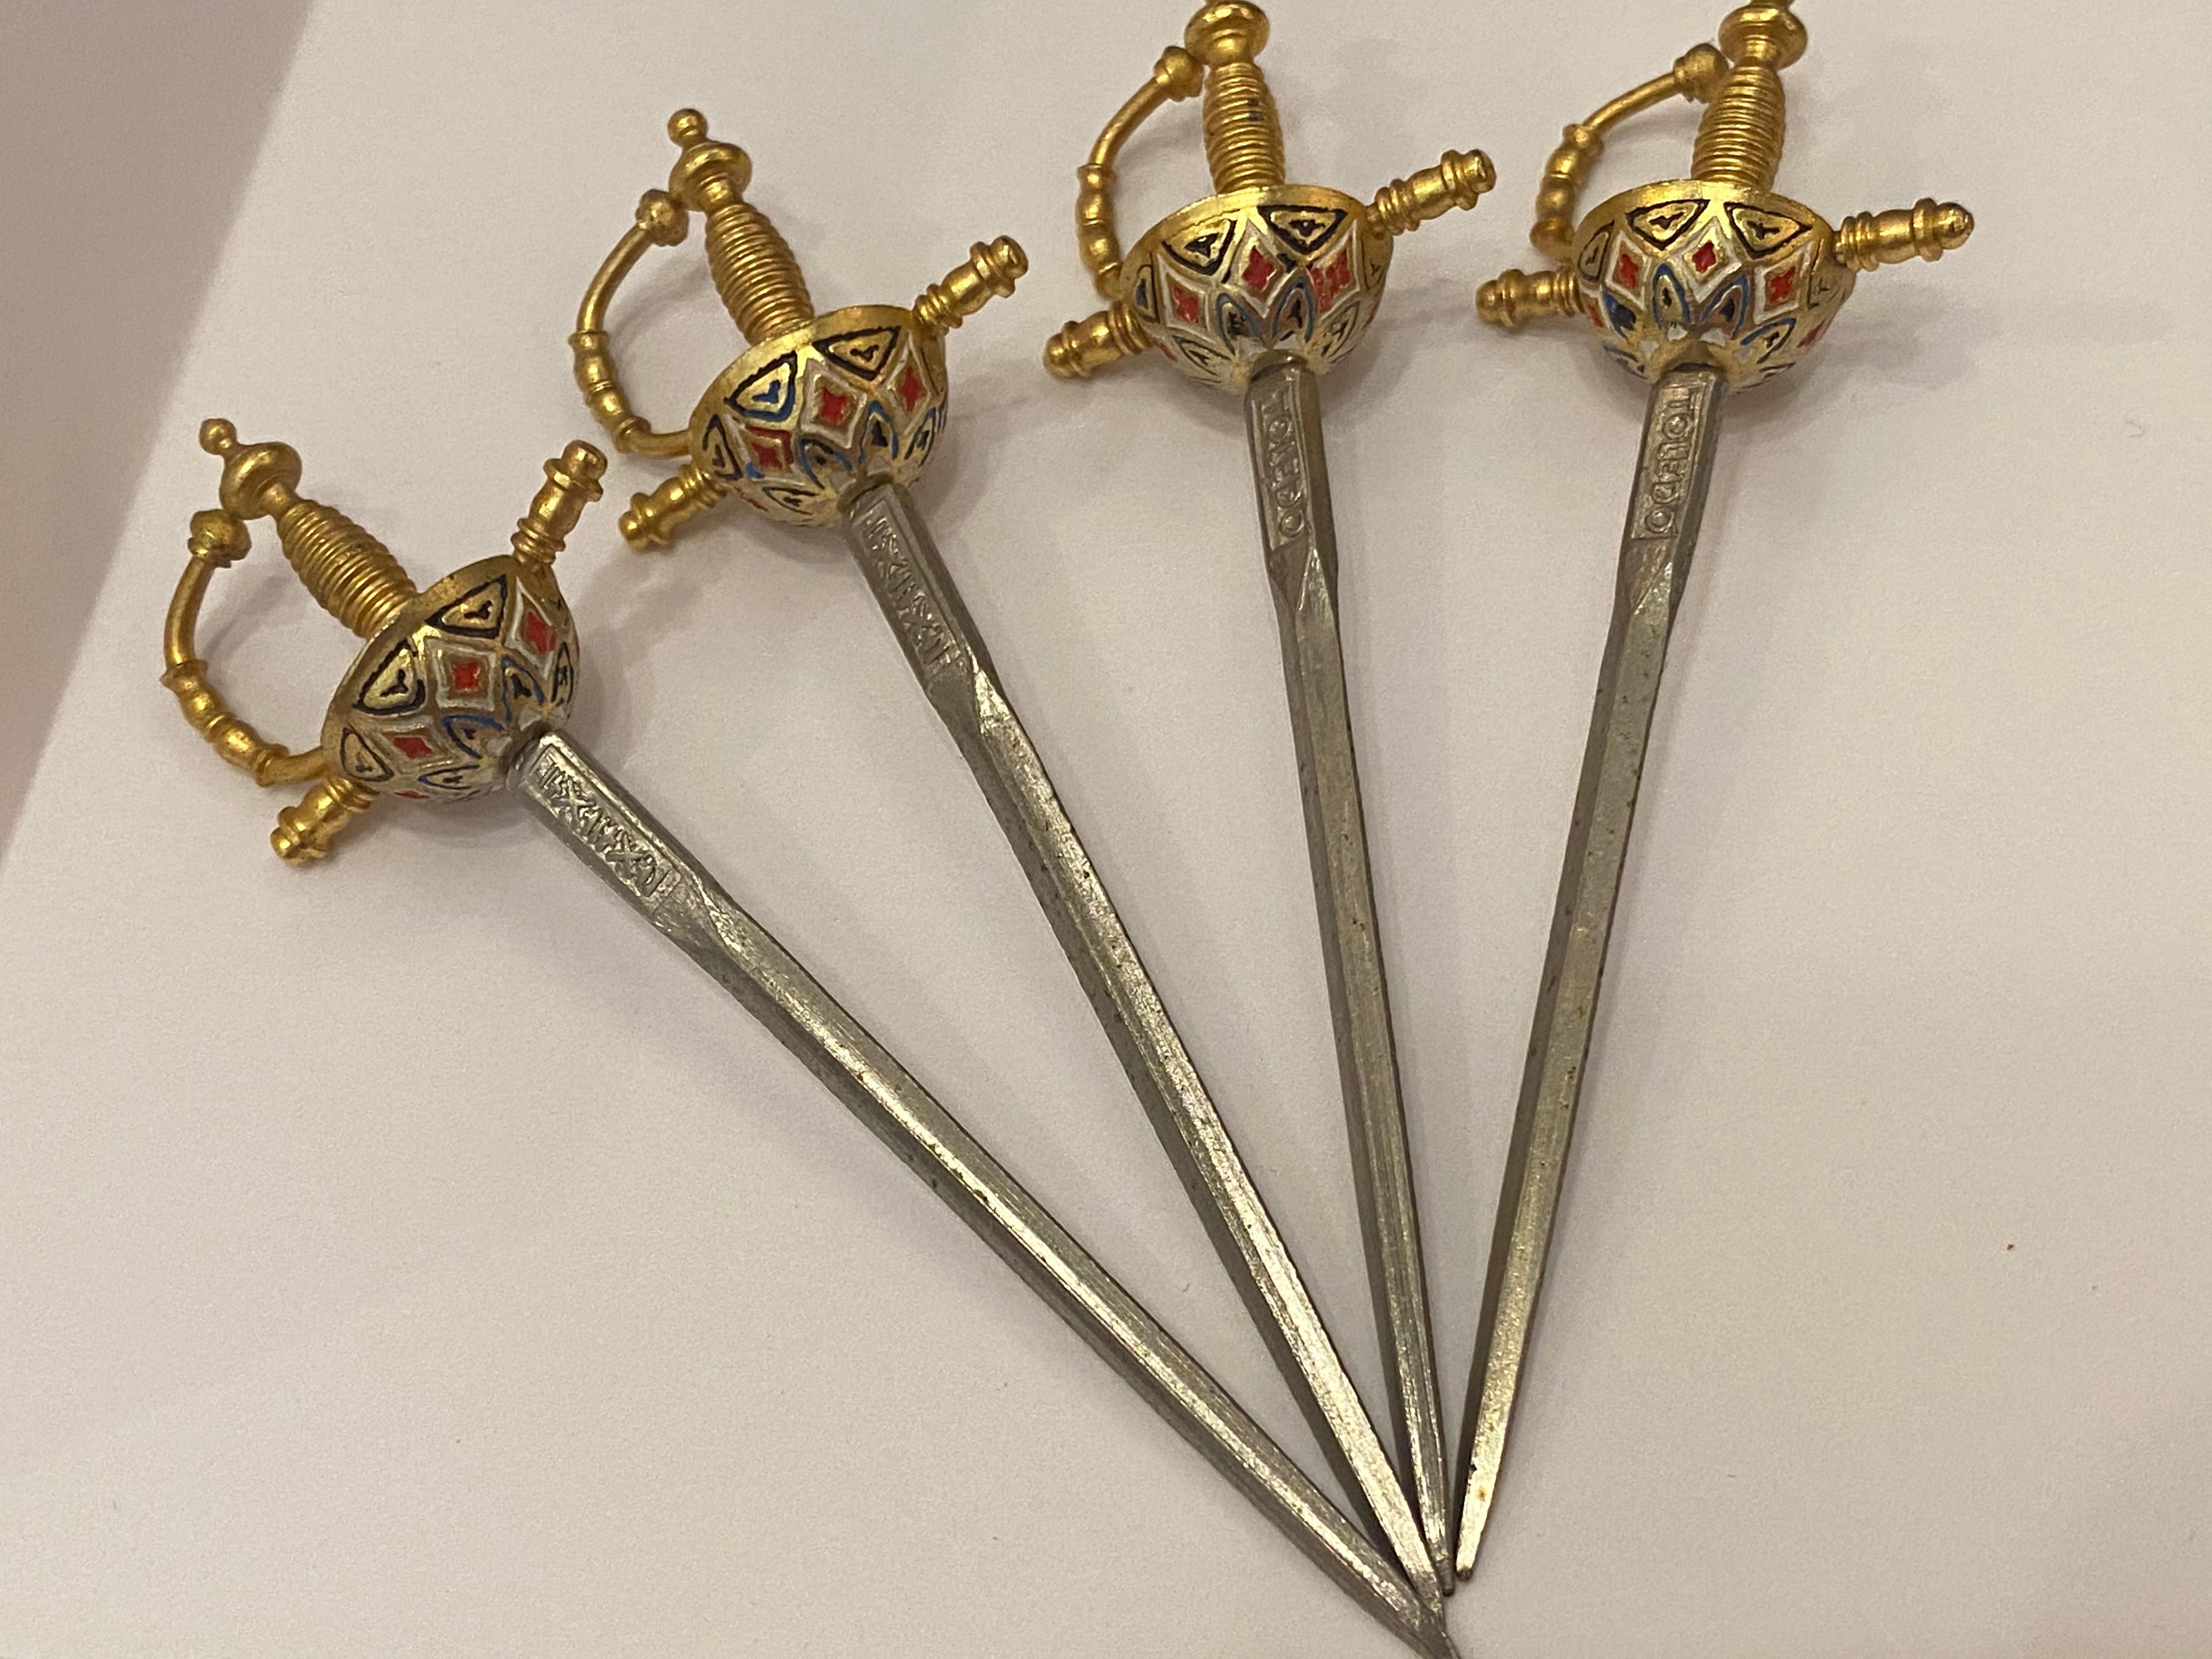 Spanish Cocktail Sticks Damascene Miniature Swords Vintage Bar Accessories Toledo, Spain